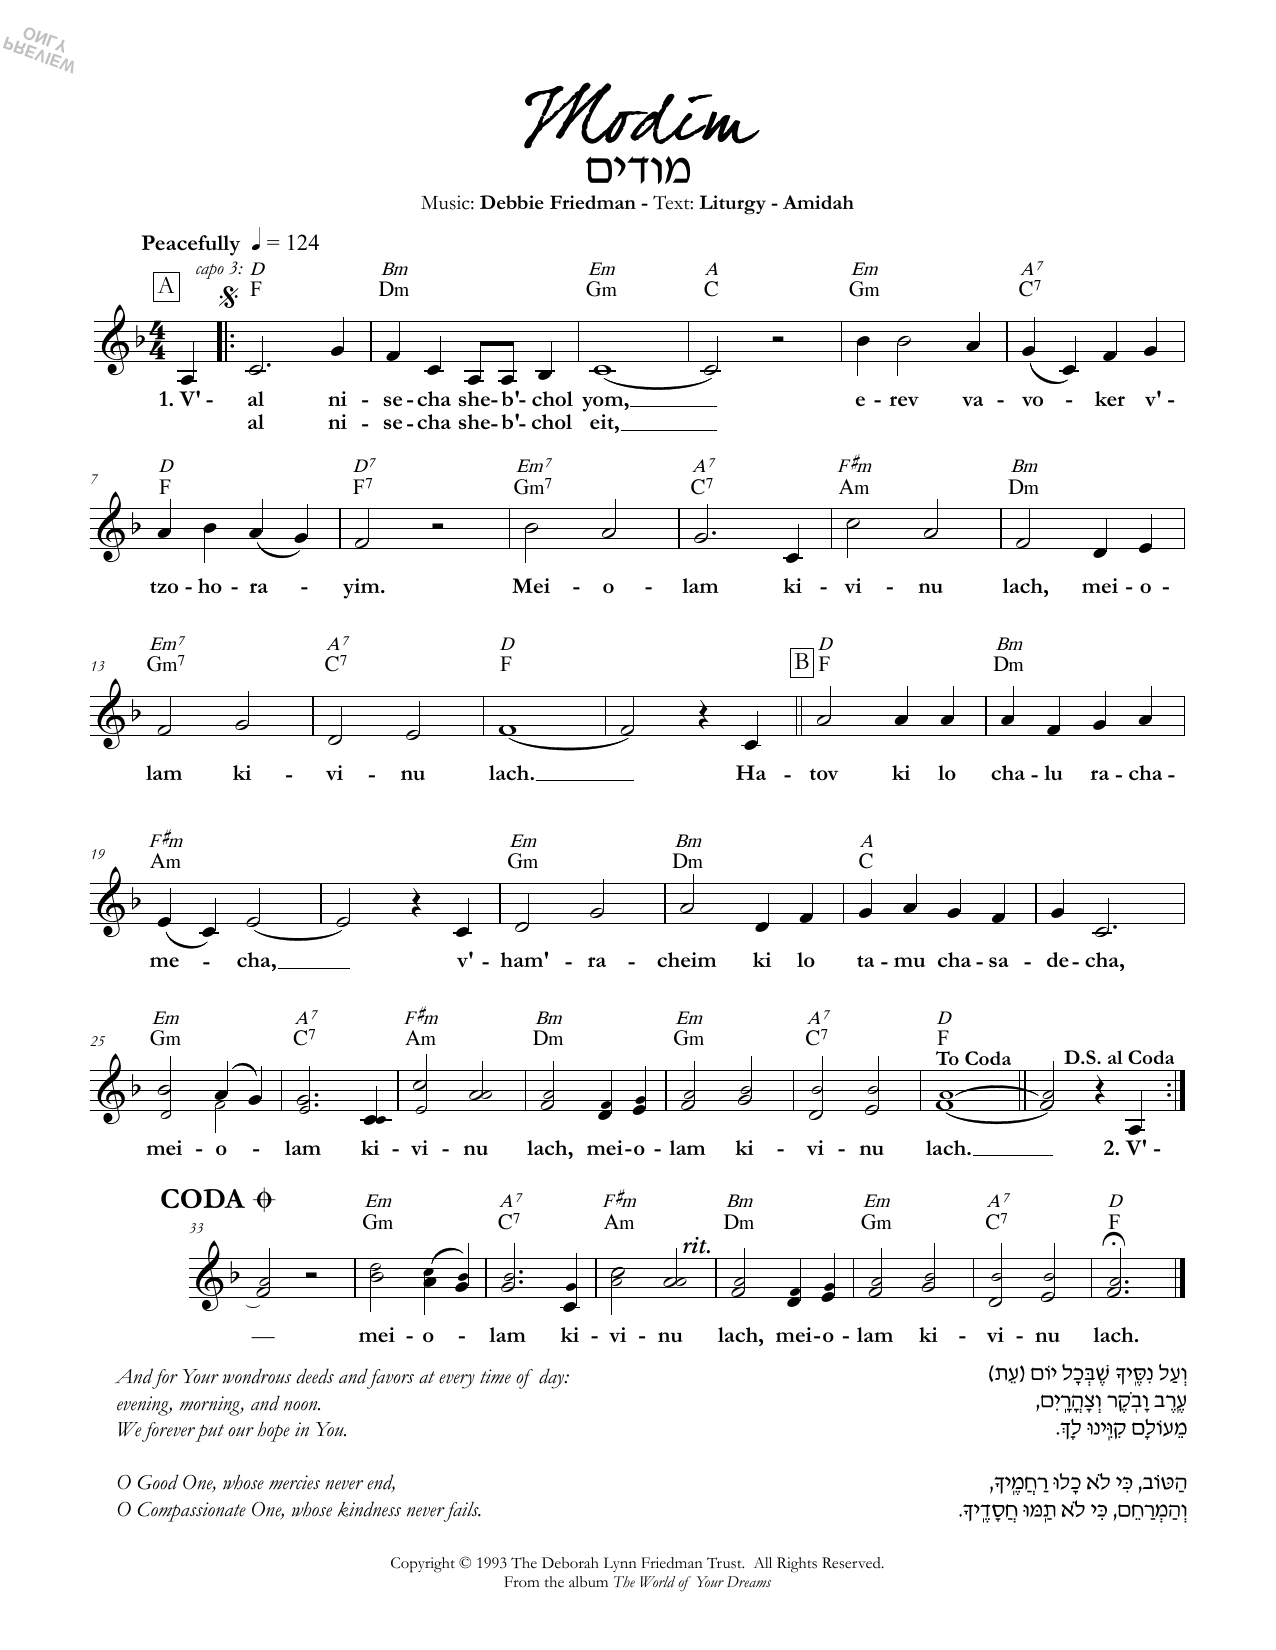 Debbie Friedman Modim Sheet Music Notes & Chords for Lead Sheet / Fake Book - Download or Print PDF